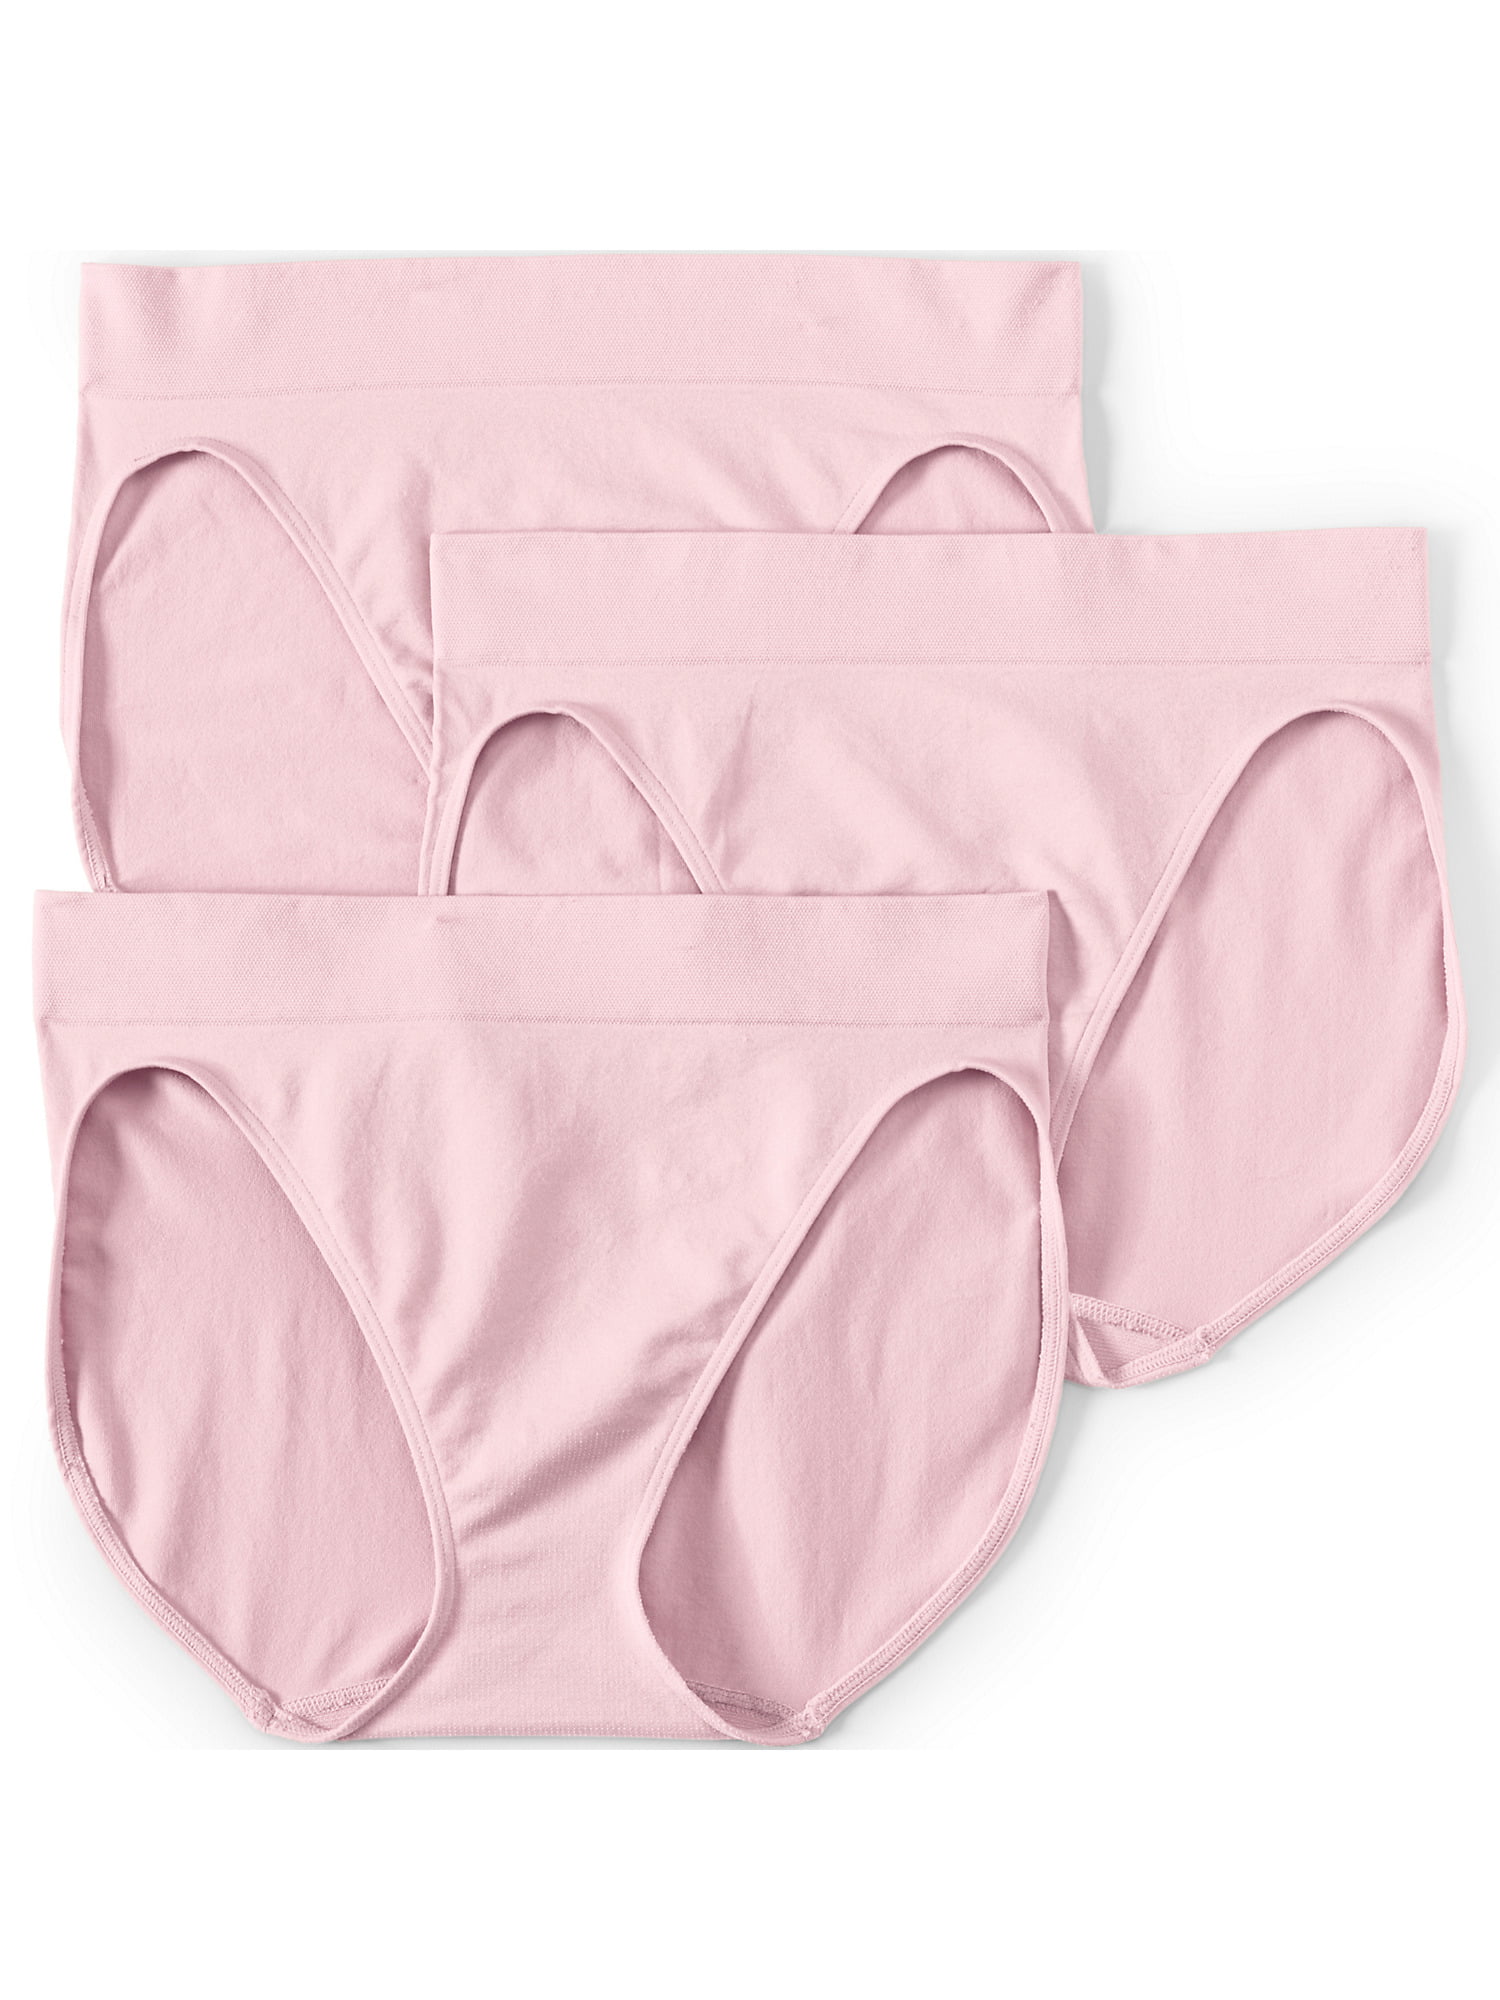 Lands' End Women's Seamless Mid Rise High Cut Brief Underwear - 3